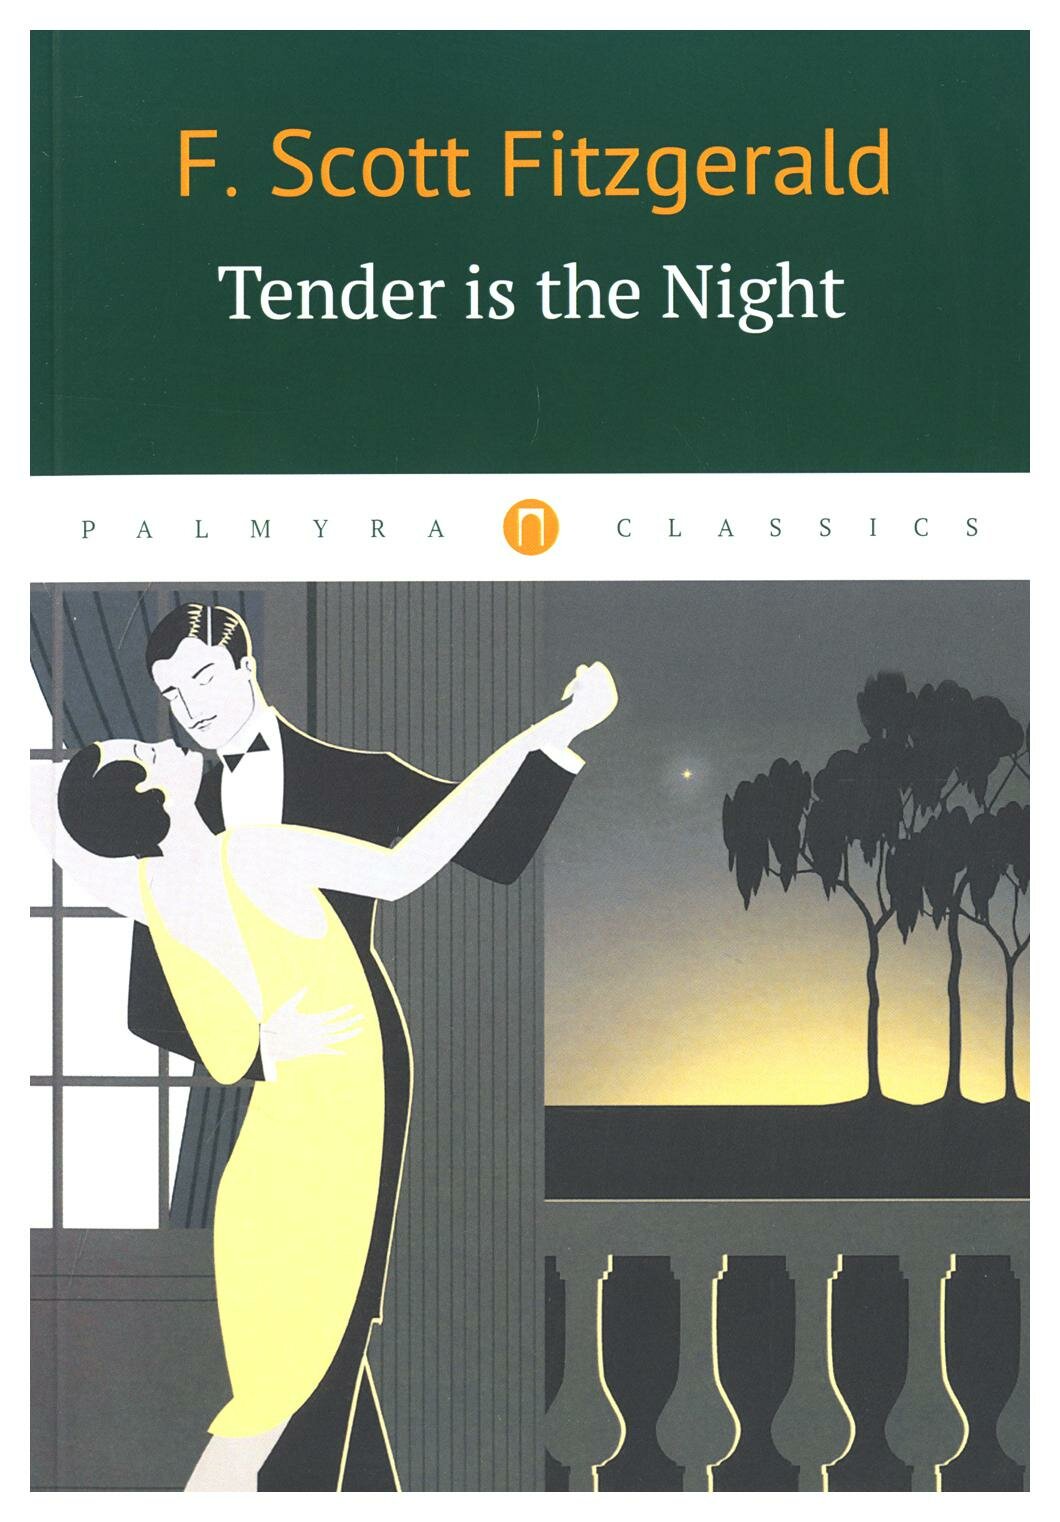 Tender Is the Night: книга на английском языке. Фицджеральд Ф.С.К. Т8 RUGRAM